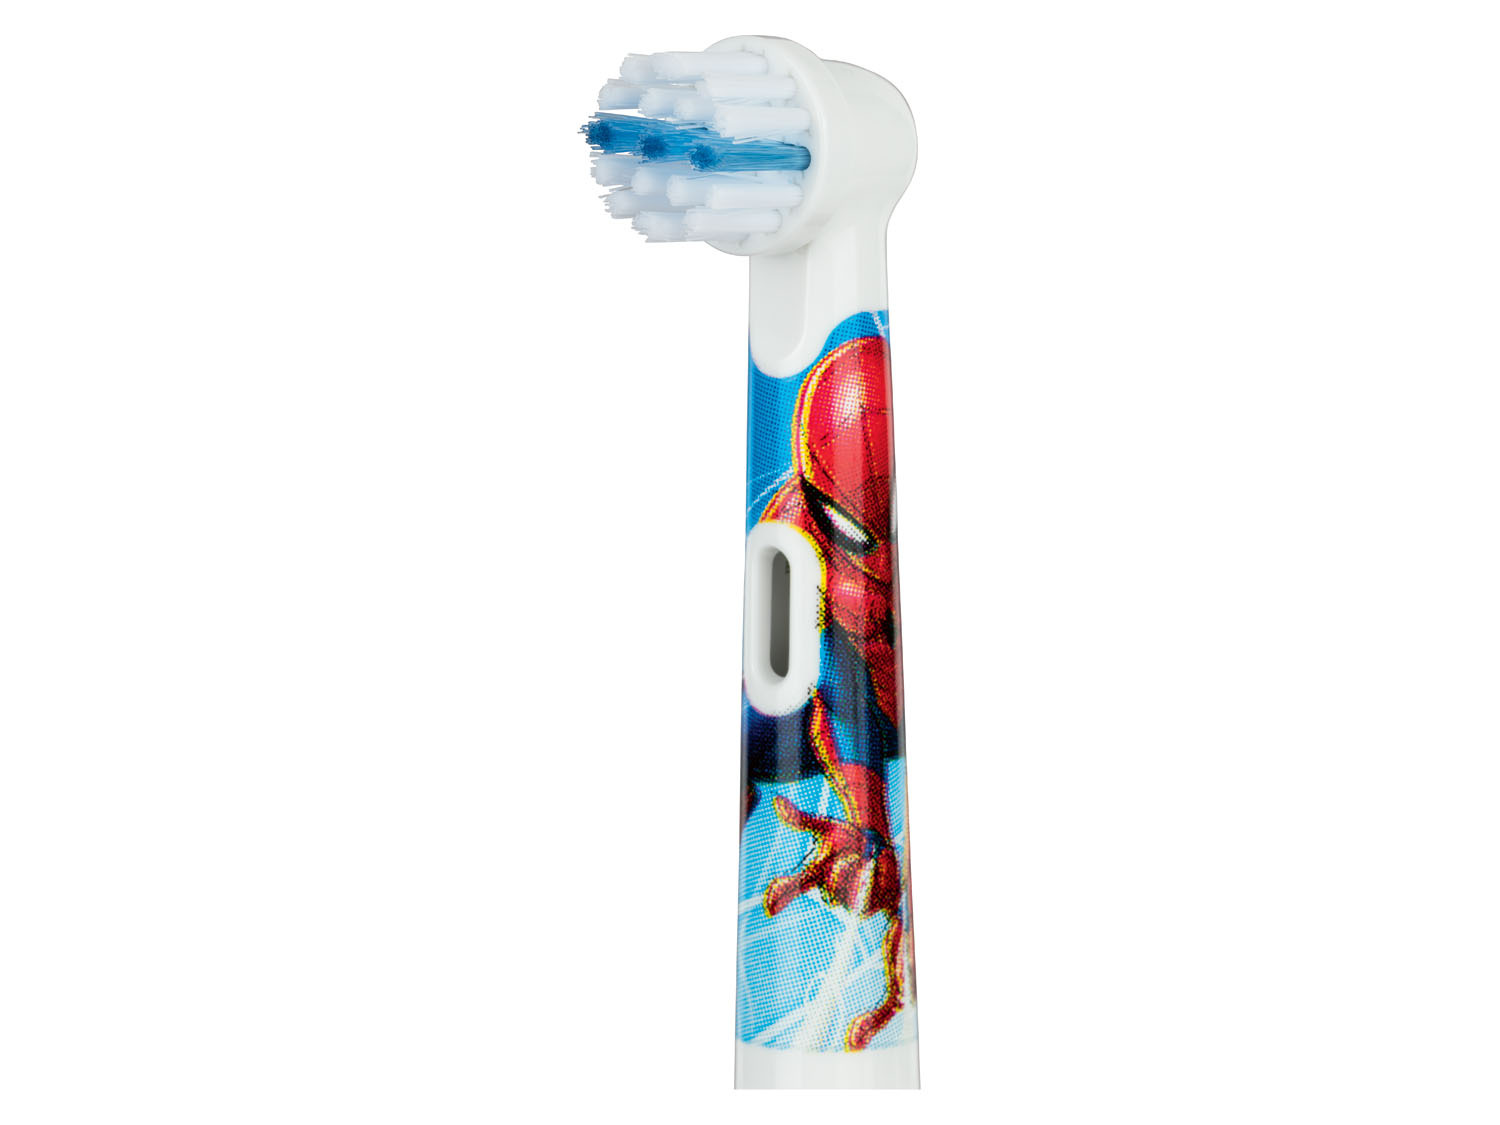 onhandig volleybal formaat Oral-B Elektrische tandenborstel Spiderman | Lidl.be